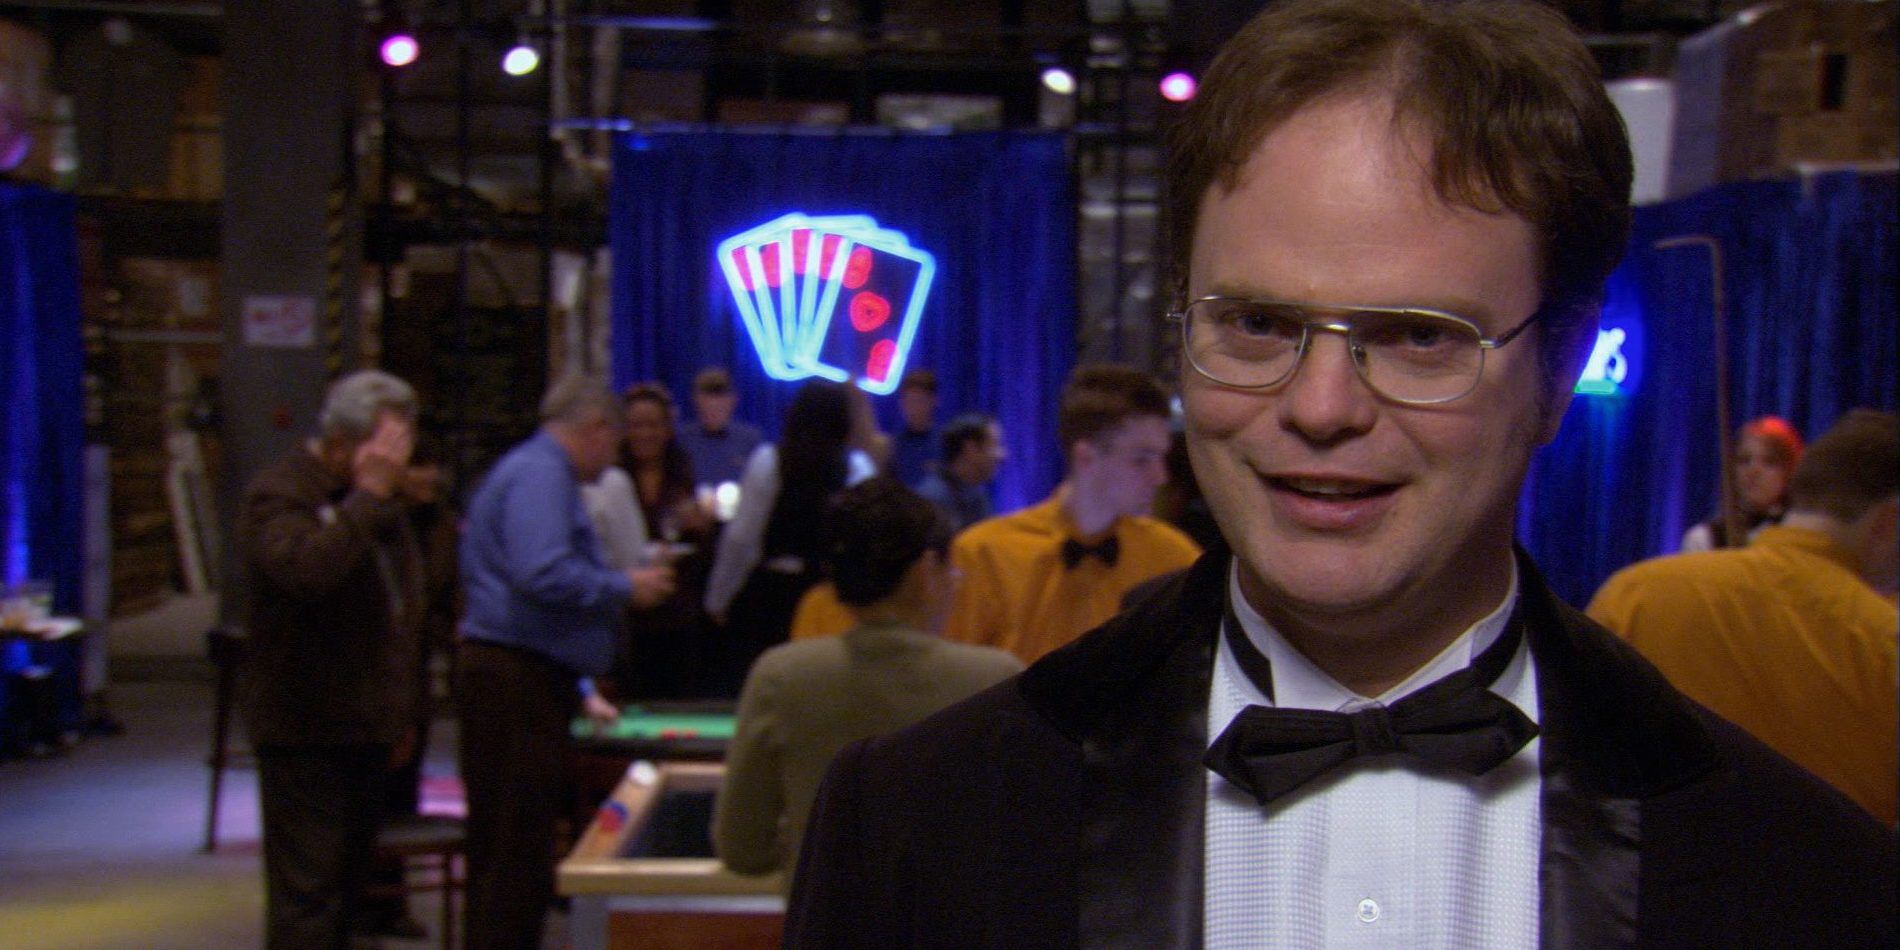 Dwight (Rainn Wilson) grinning in a tuxedo during casino night in The Office